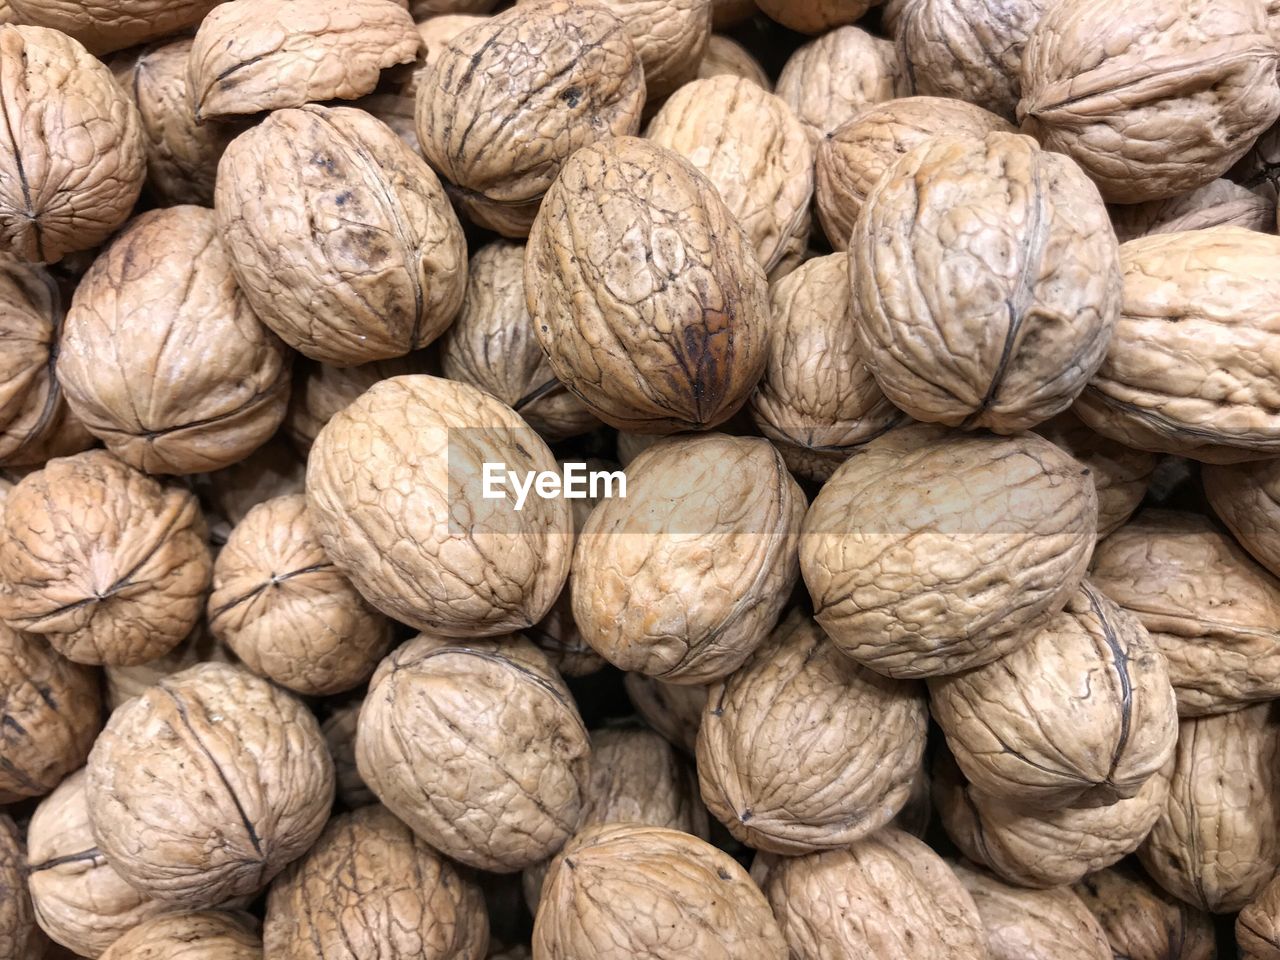 Full frame shot of whole walnuts